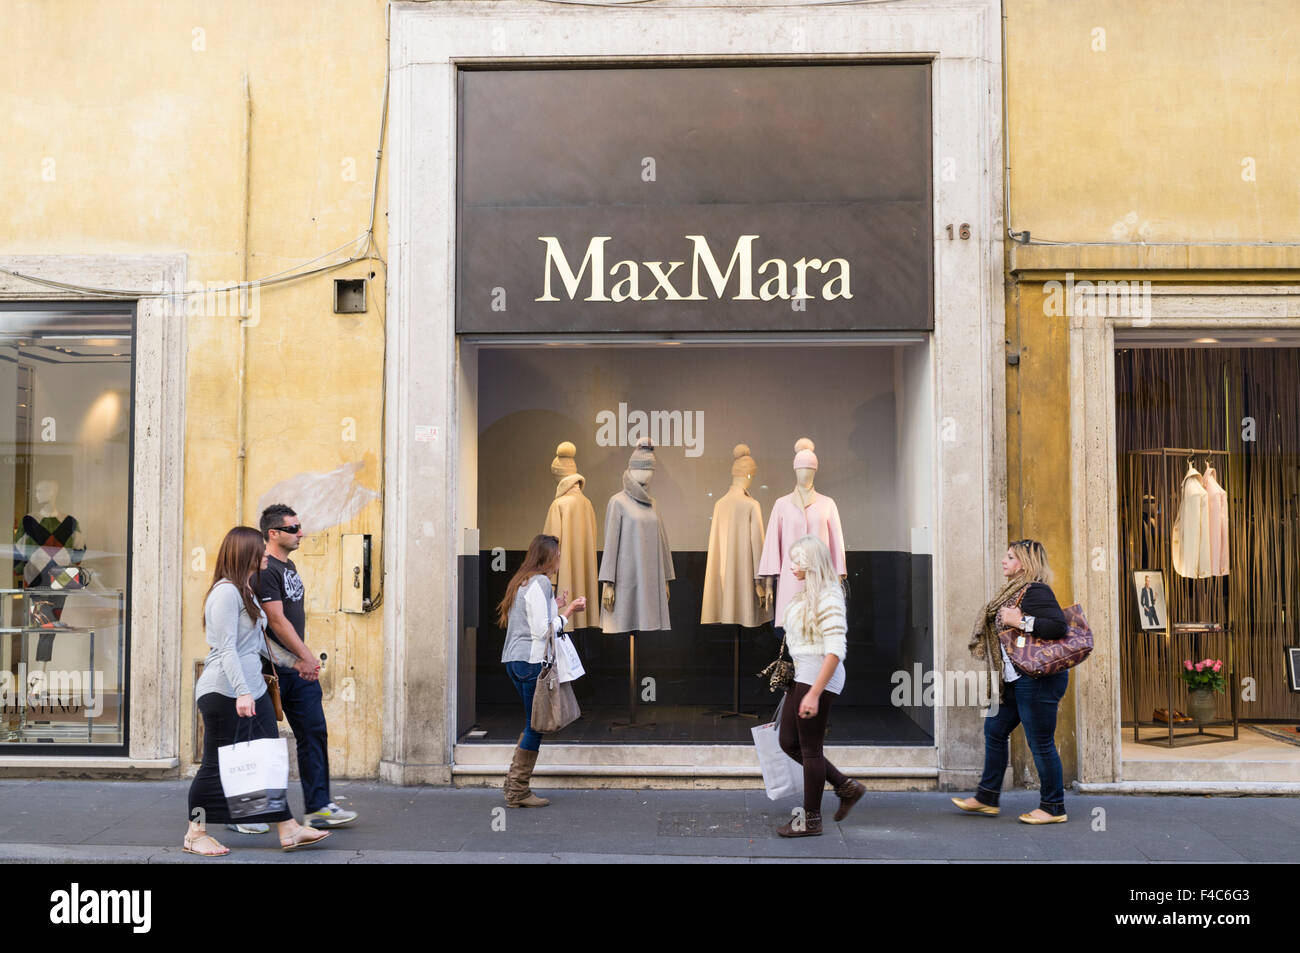 Max Mara store, Via Condotti, Rome, Italy Stock Photo - Alamy